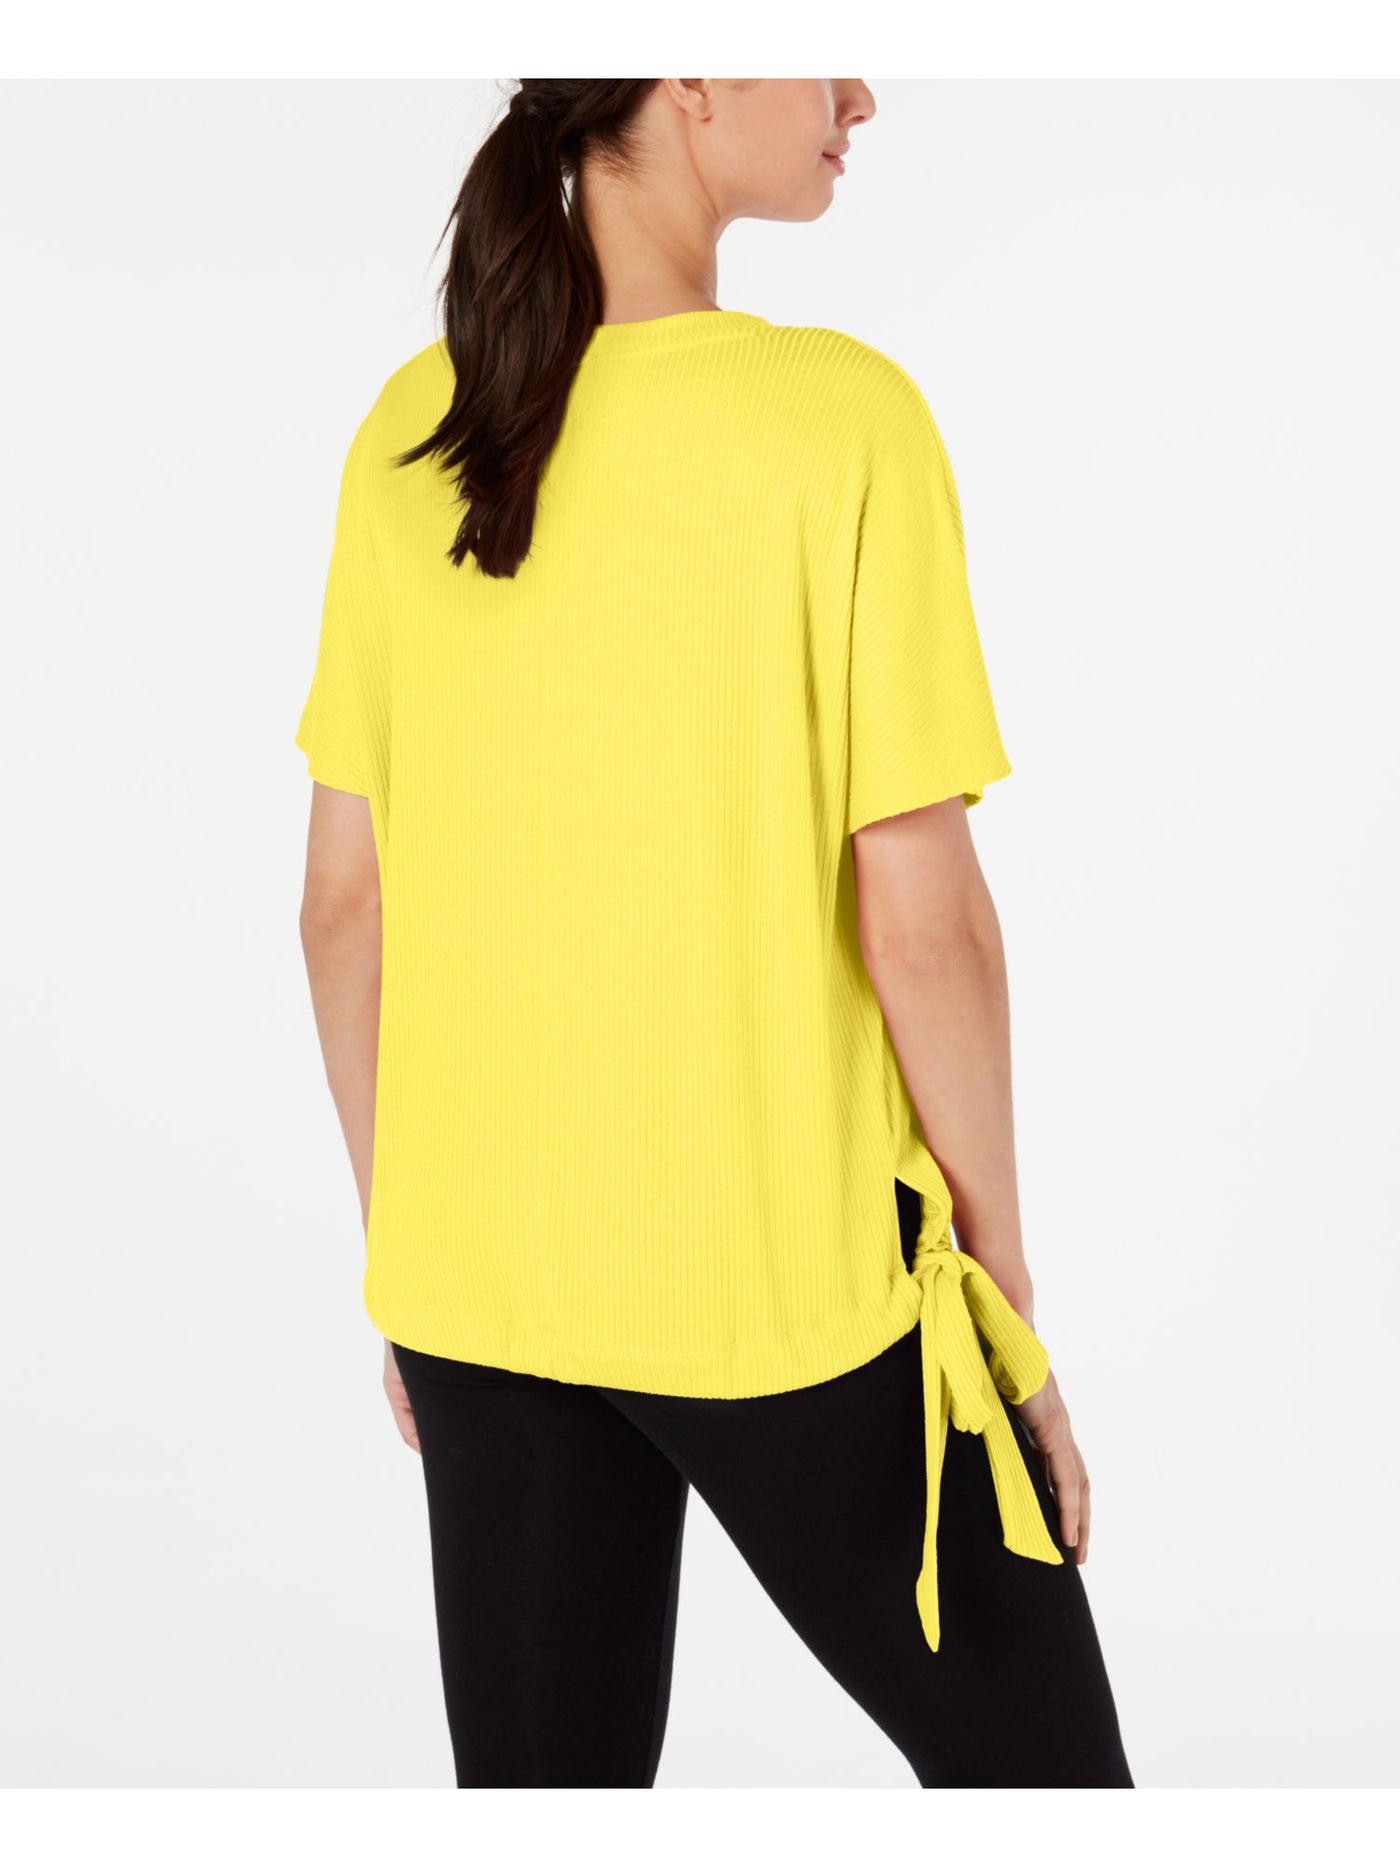 IDEOLOGY Womens Yellow Ribbed Patterned Short Sleeve Jewel Neck T-Shirt XS